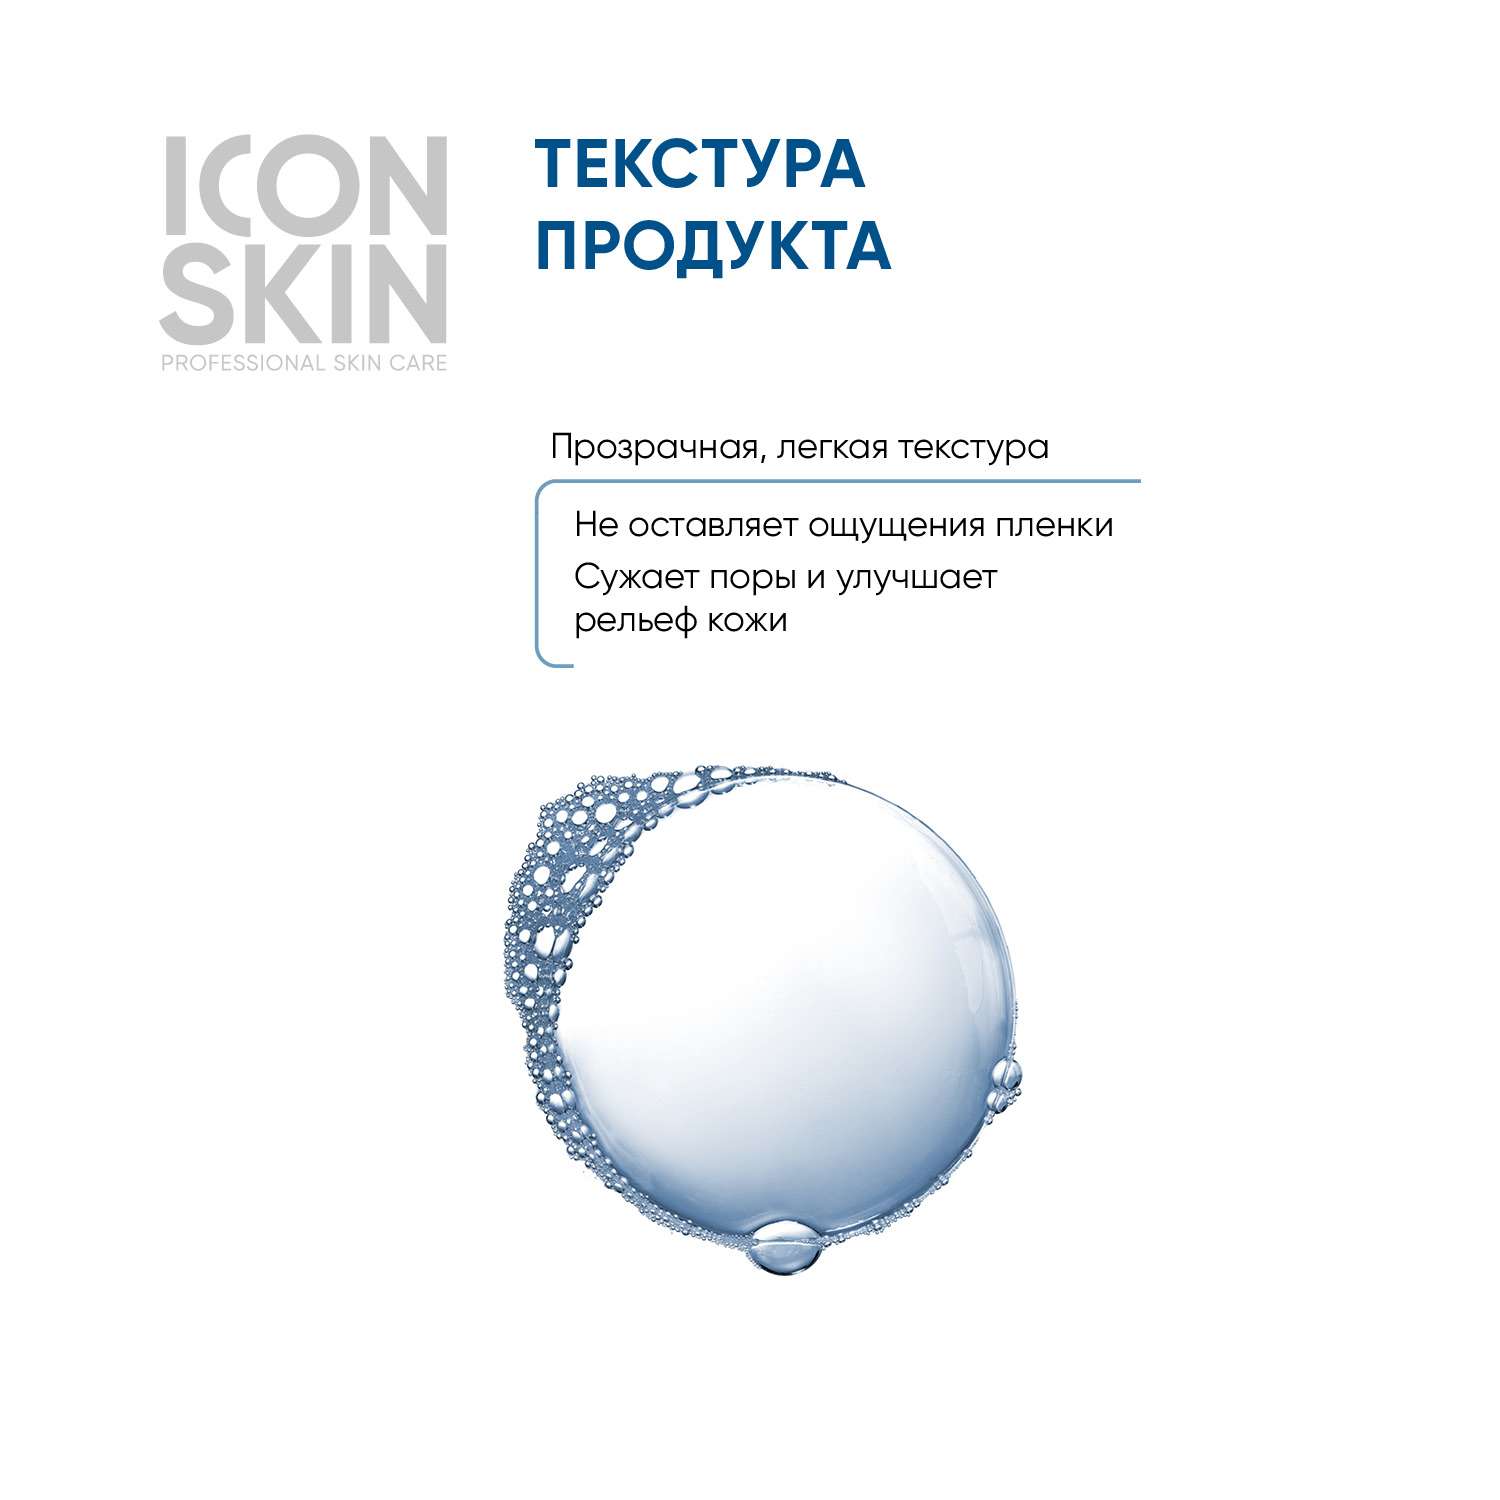 Тоник ICON SKIN очищающий активатор ultra skin 150 мл - фото 4